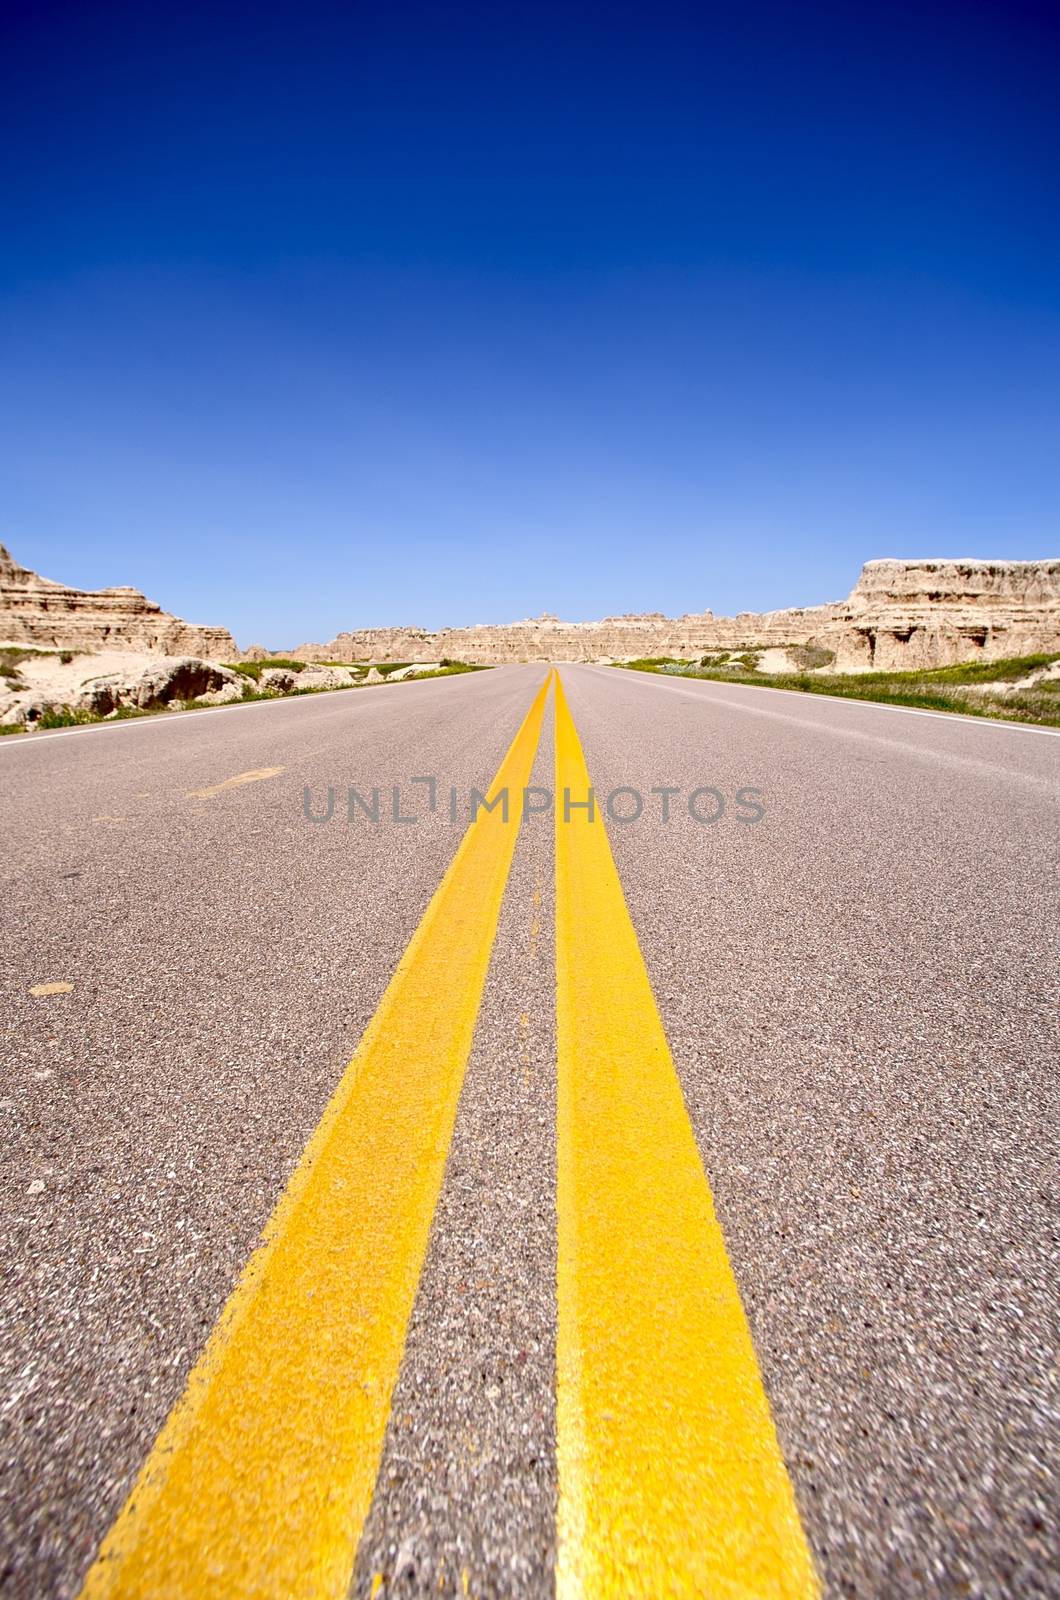 Highway to West. American Highway Thru Badlands. Transportation Photo Collection